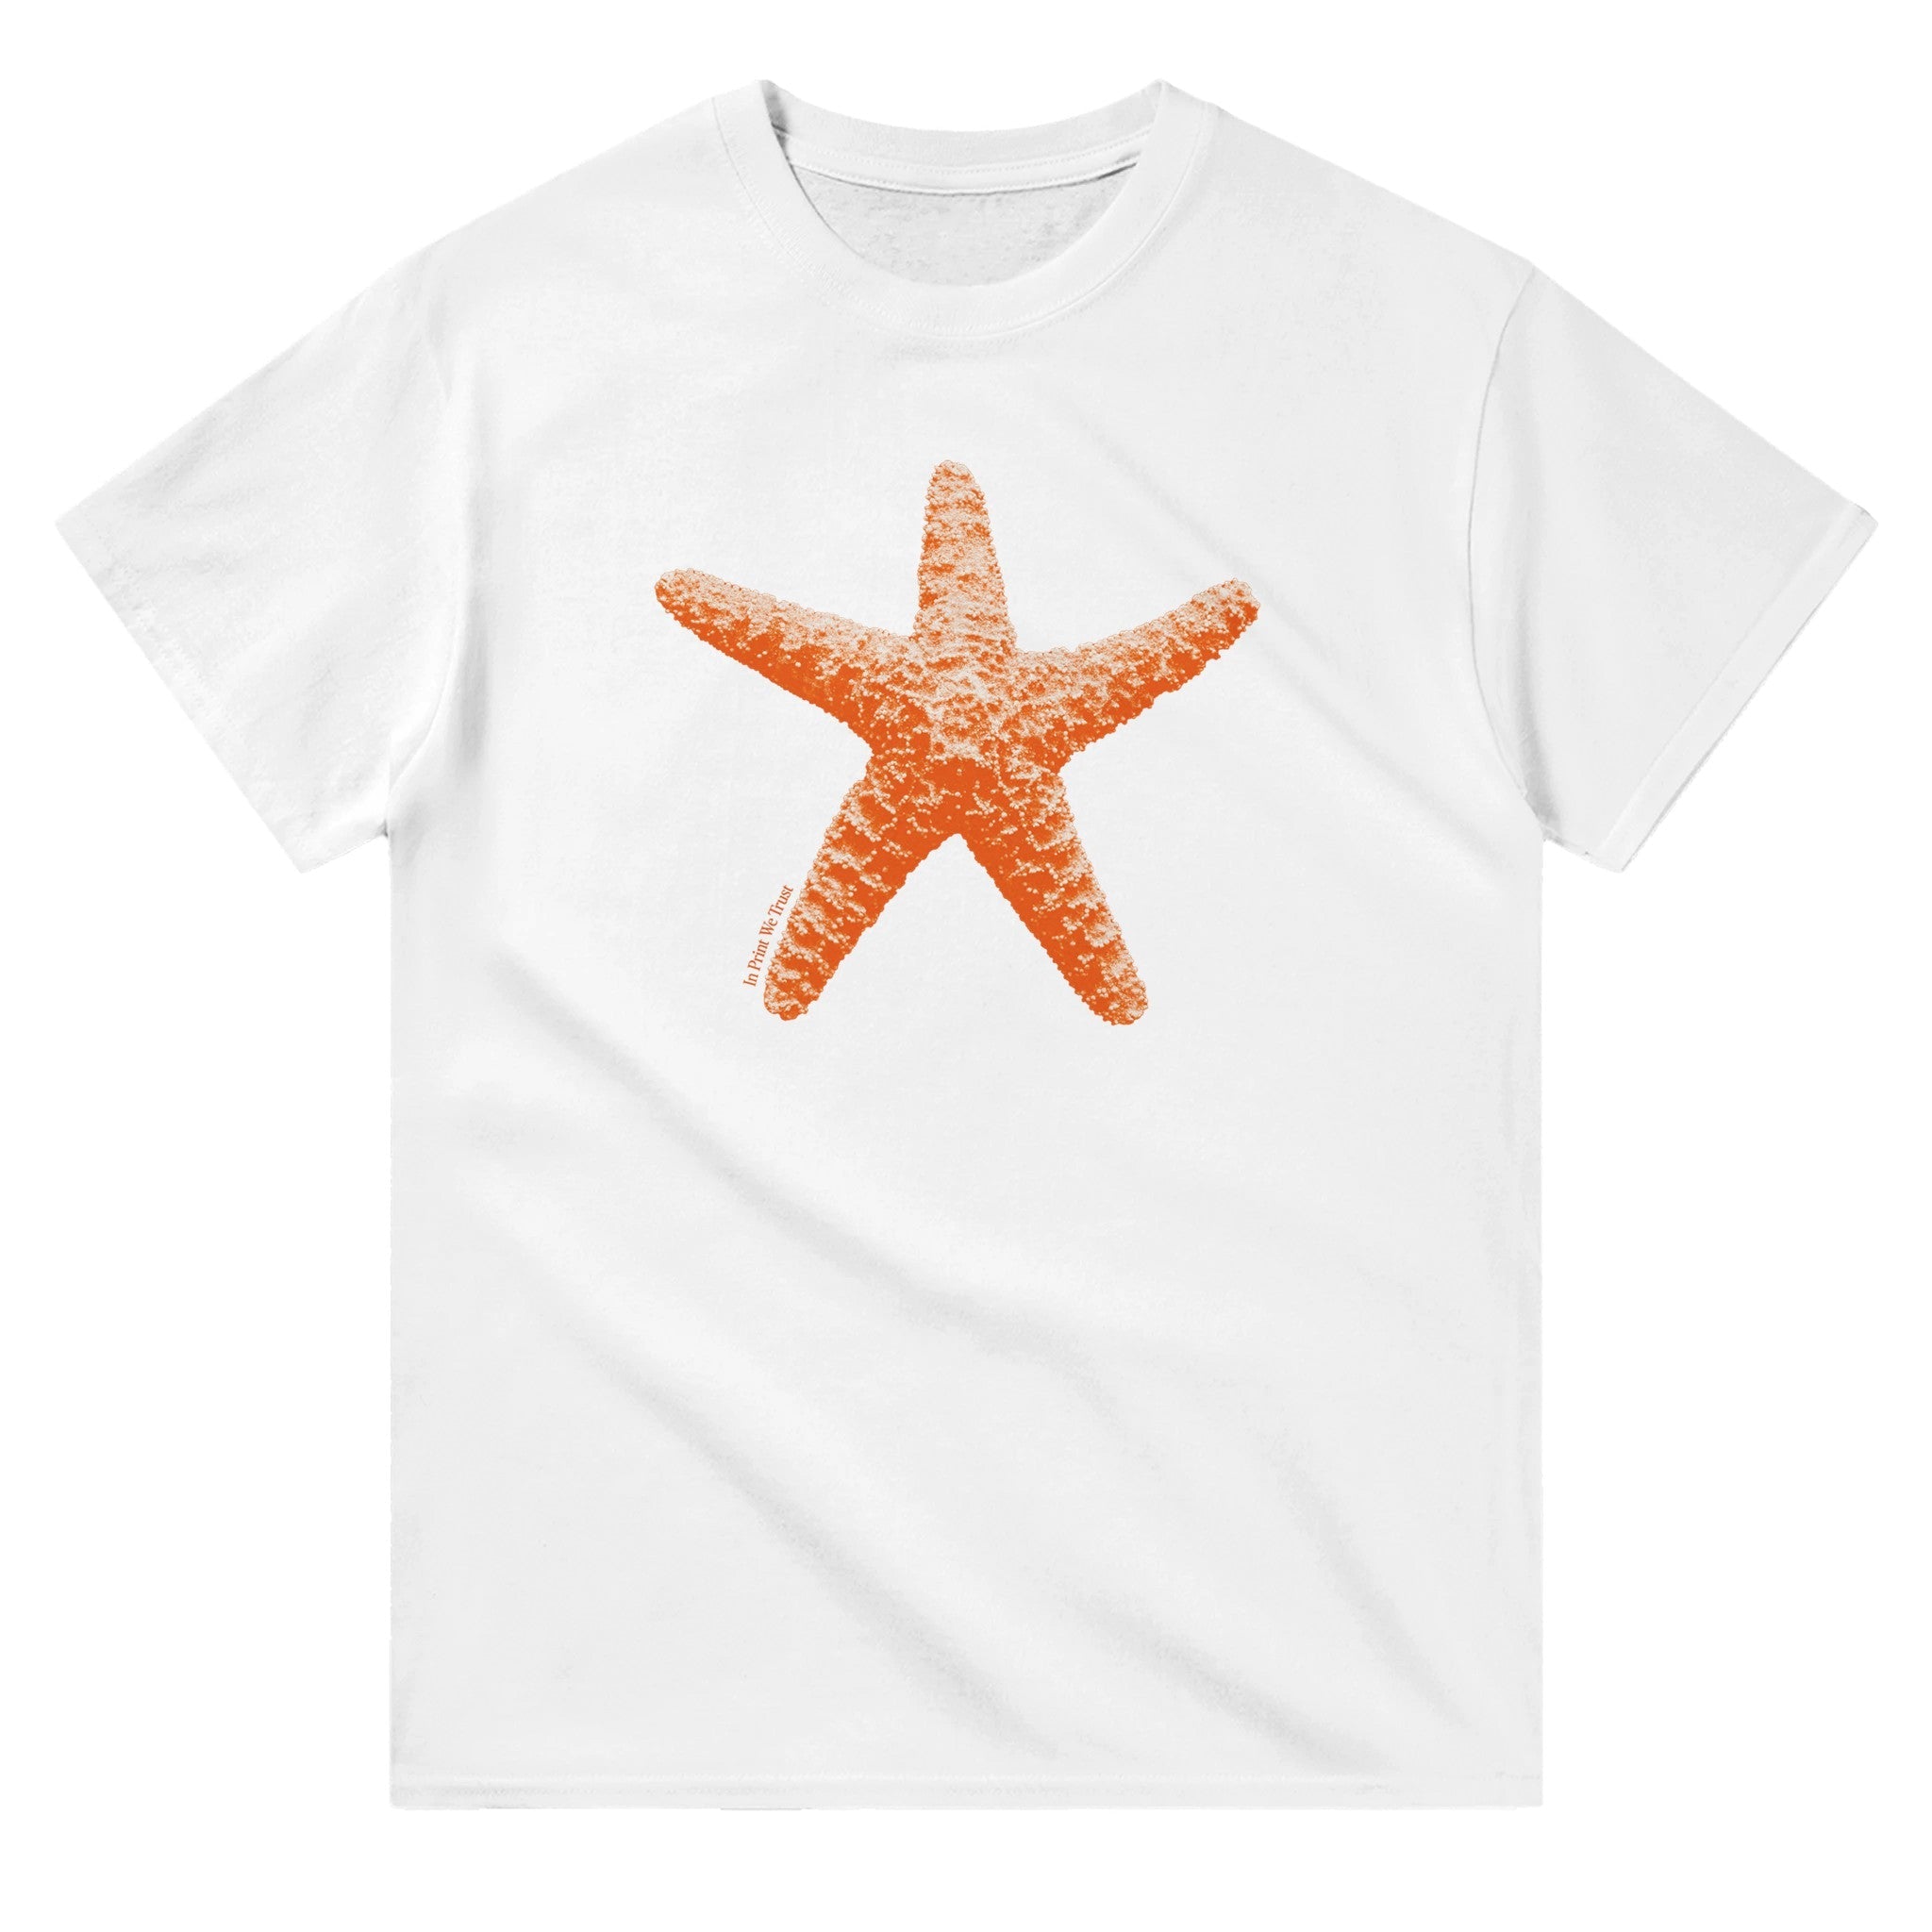 'Starfish' classic tee - In Print We Trust